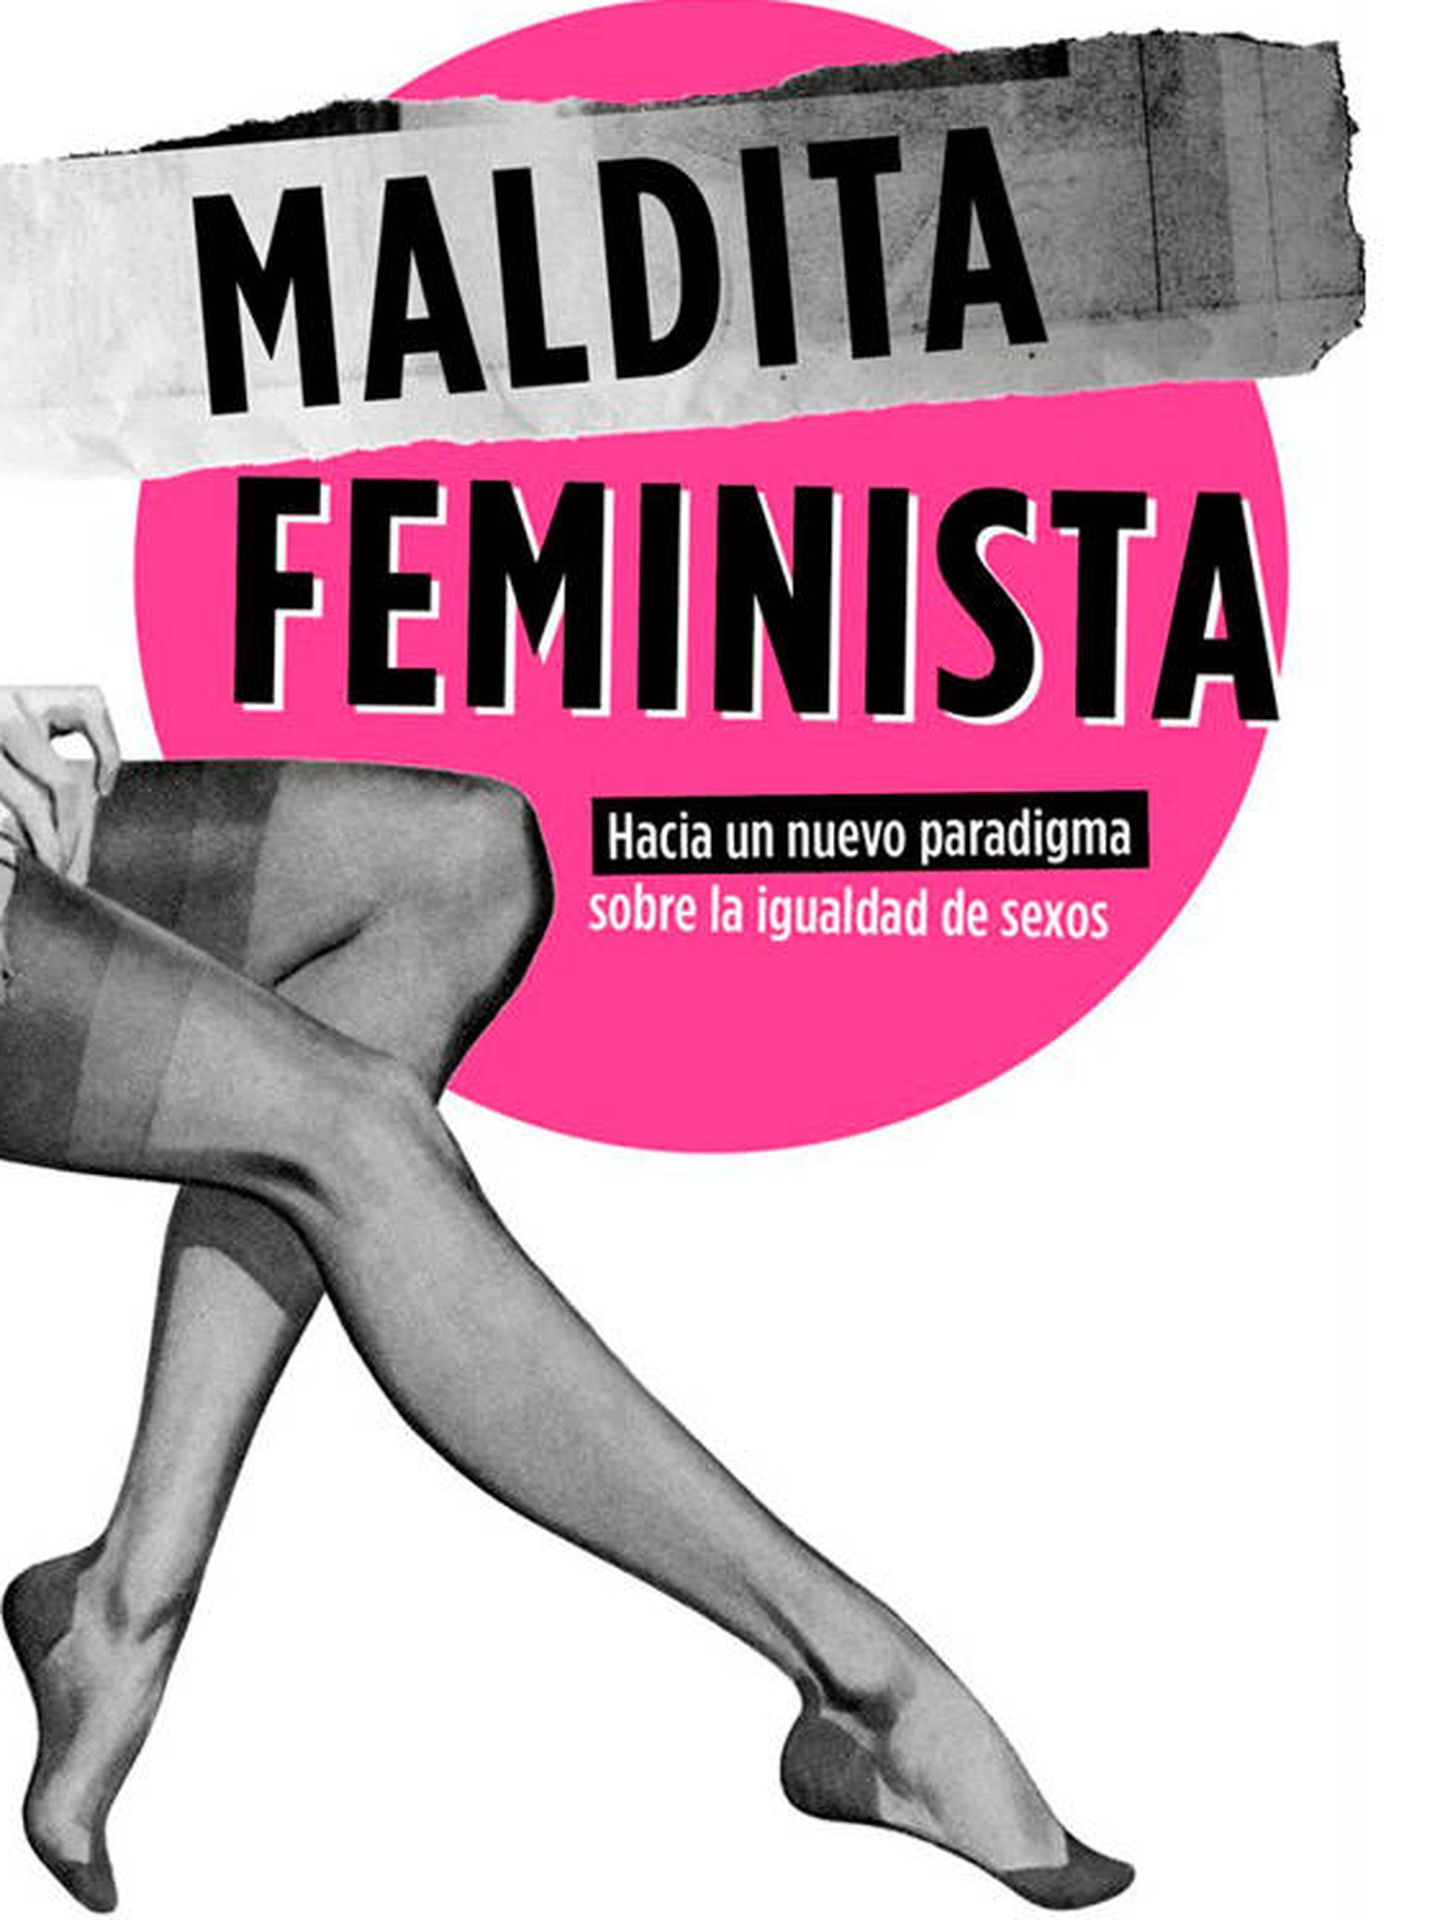 Portada del libro 'Maldita feminista', de Loola Pérez, en Seix Barral.